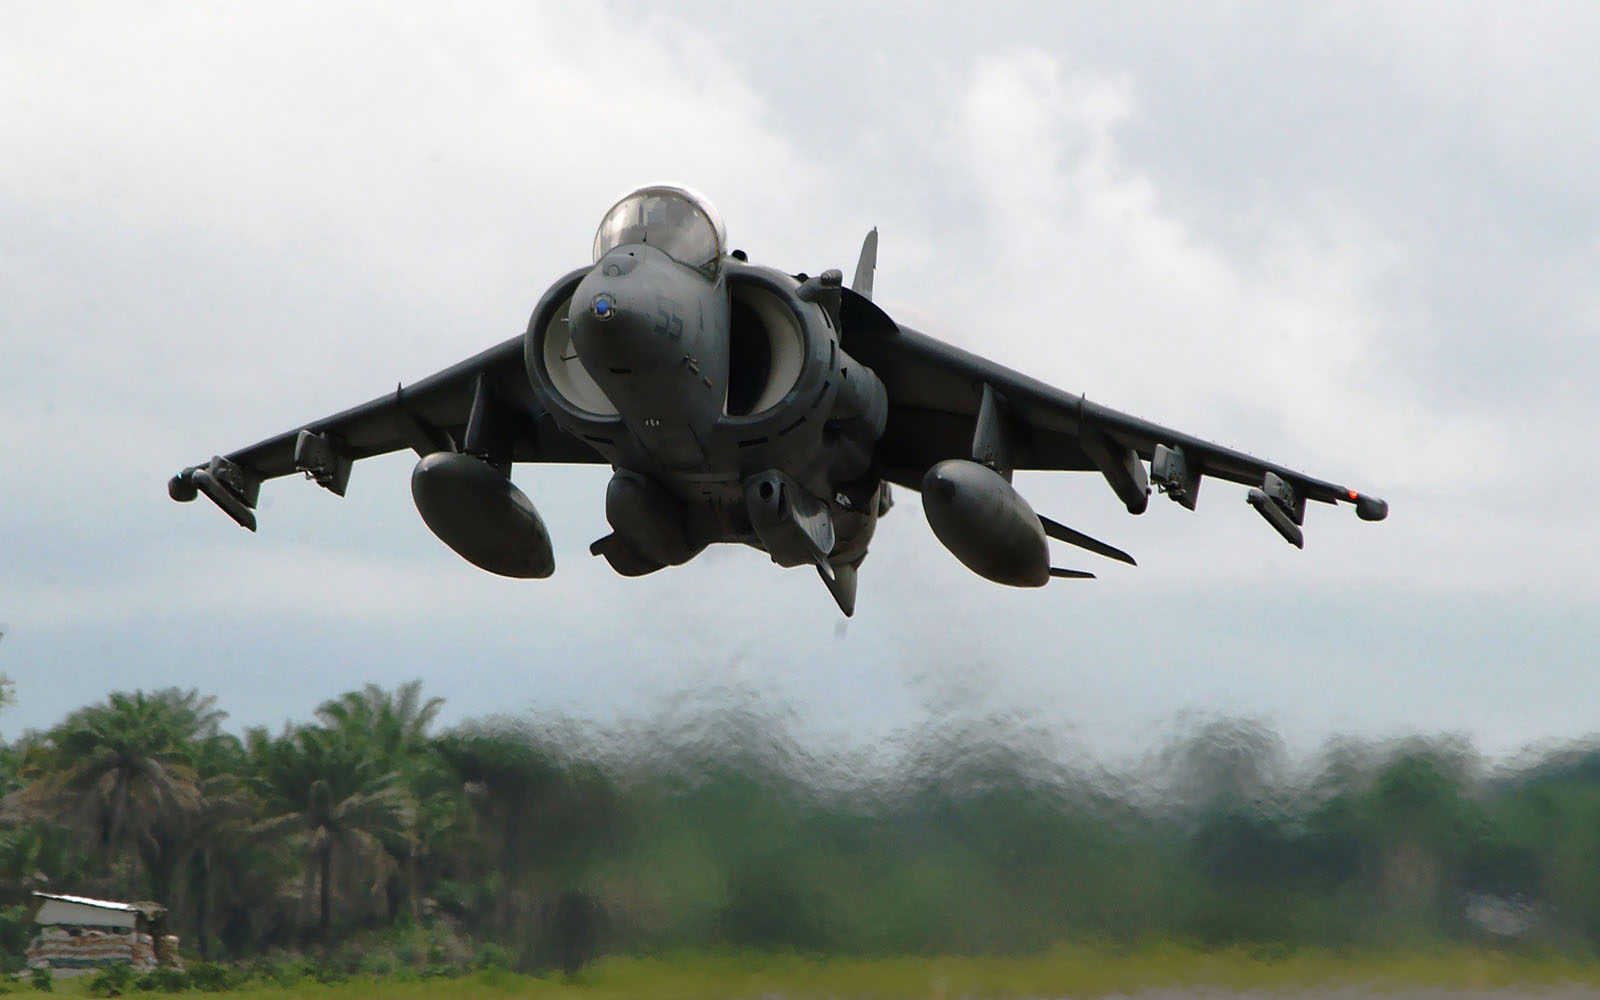 British Aerospace Harrier Ii Wallpapers